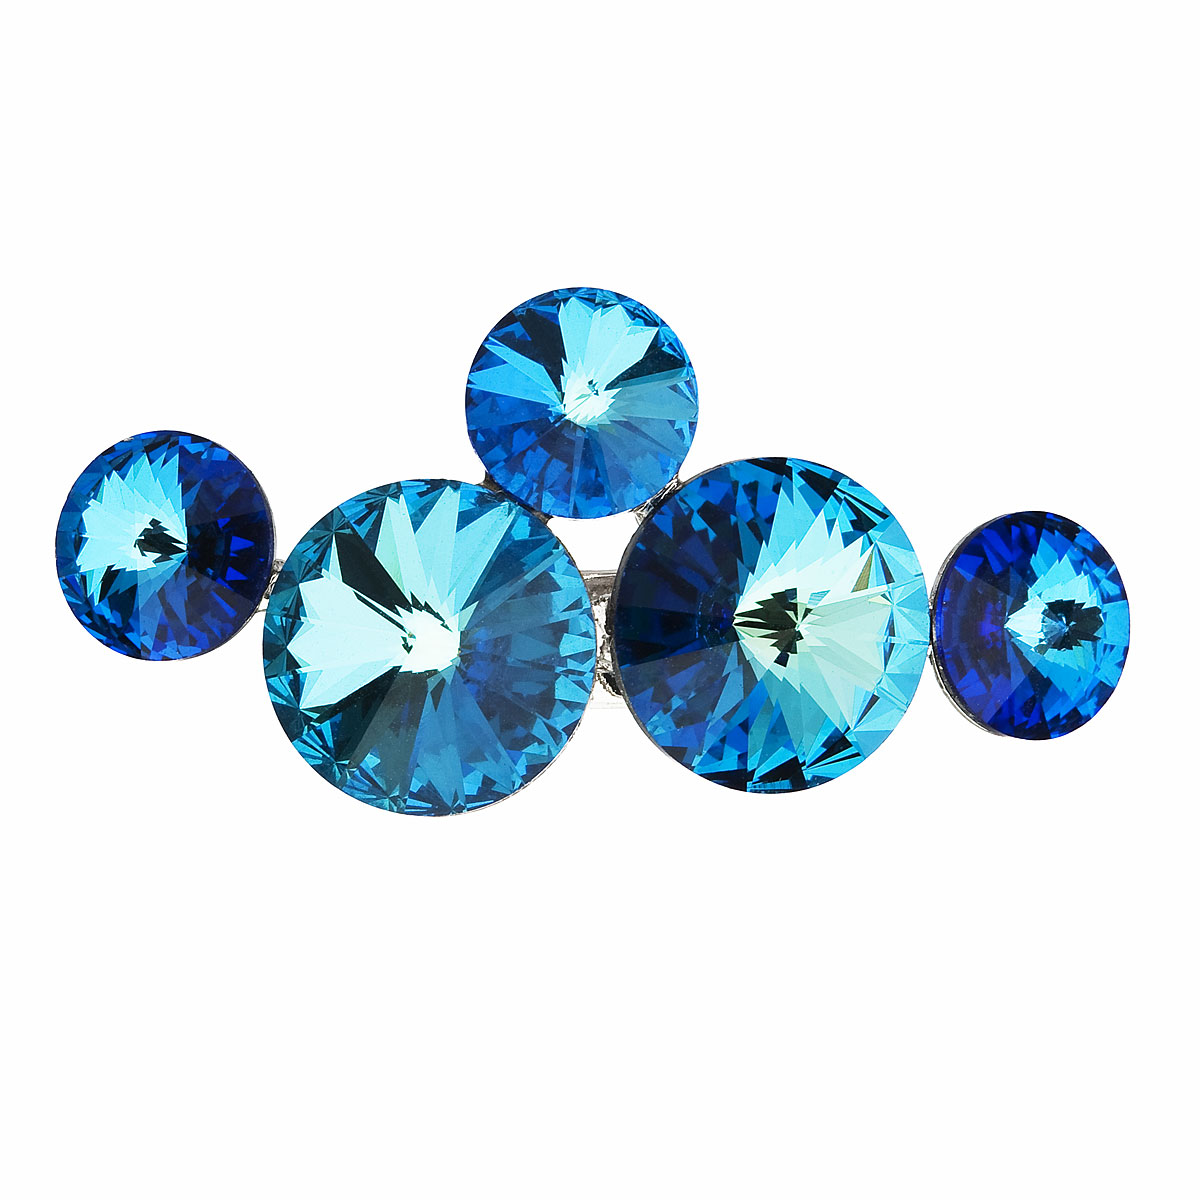 Brož bižuterie se Swarovski krystaly modrá kulatá 58001.5